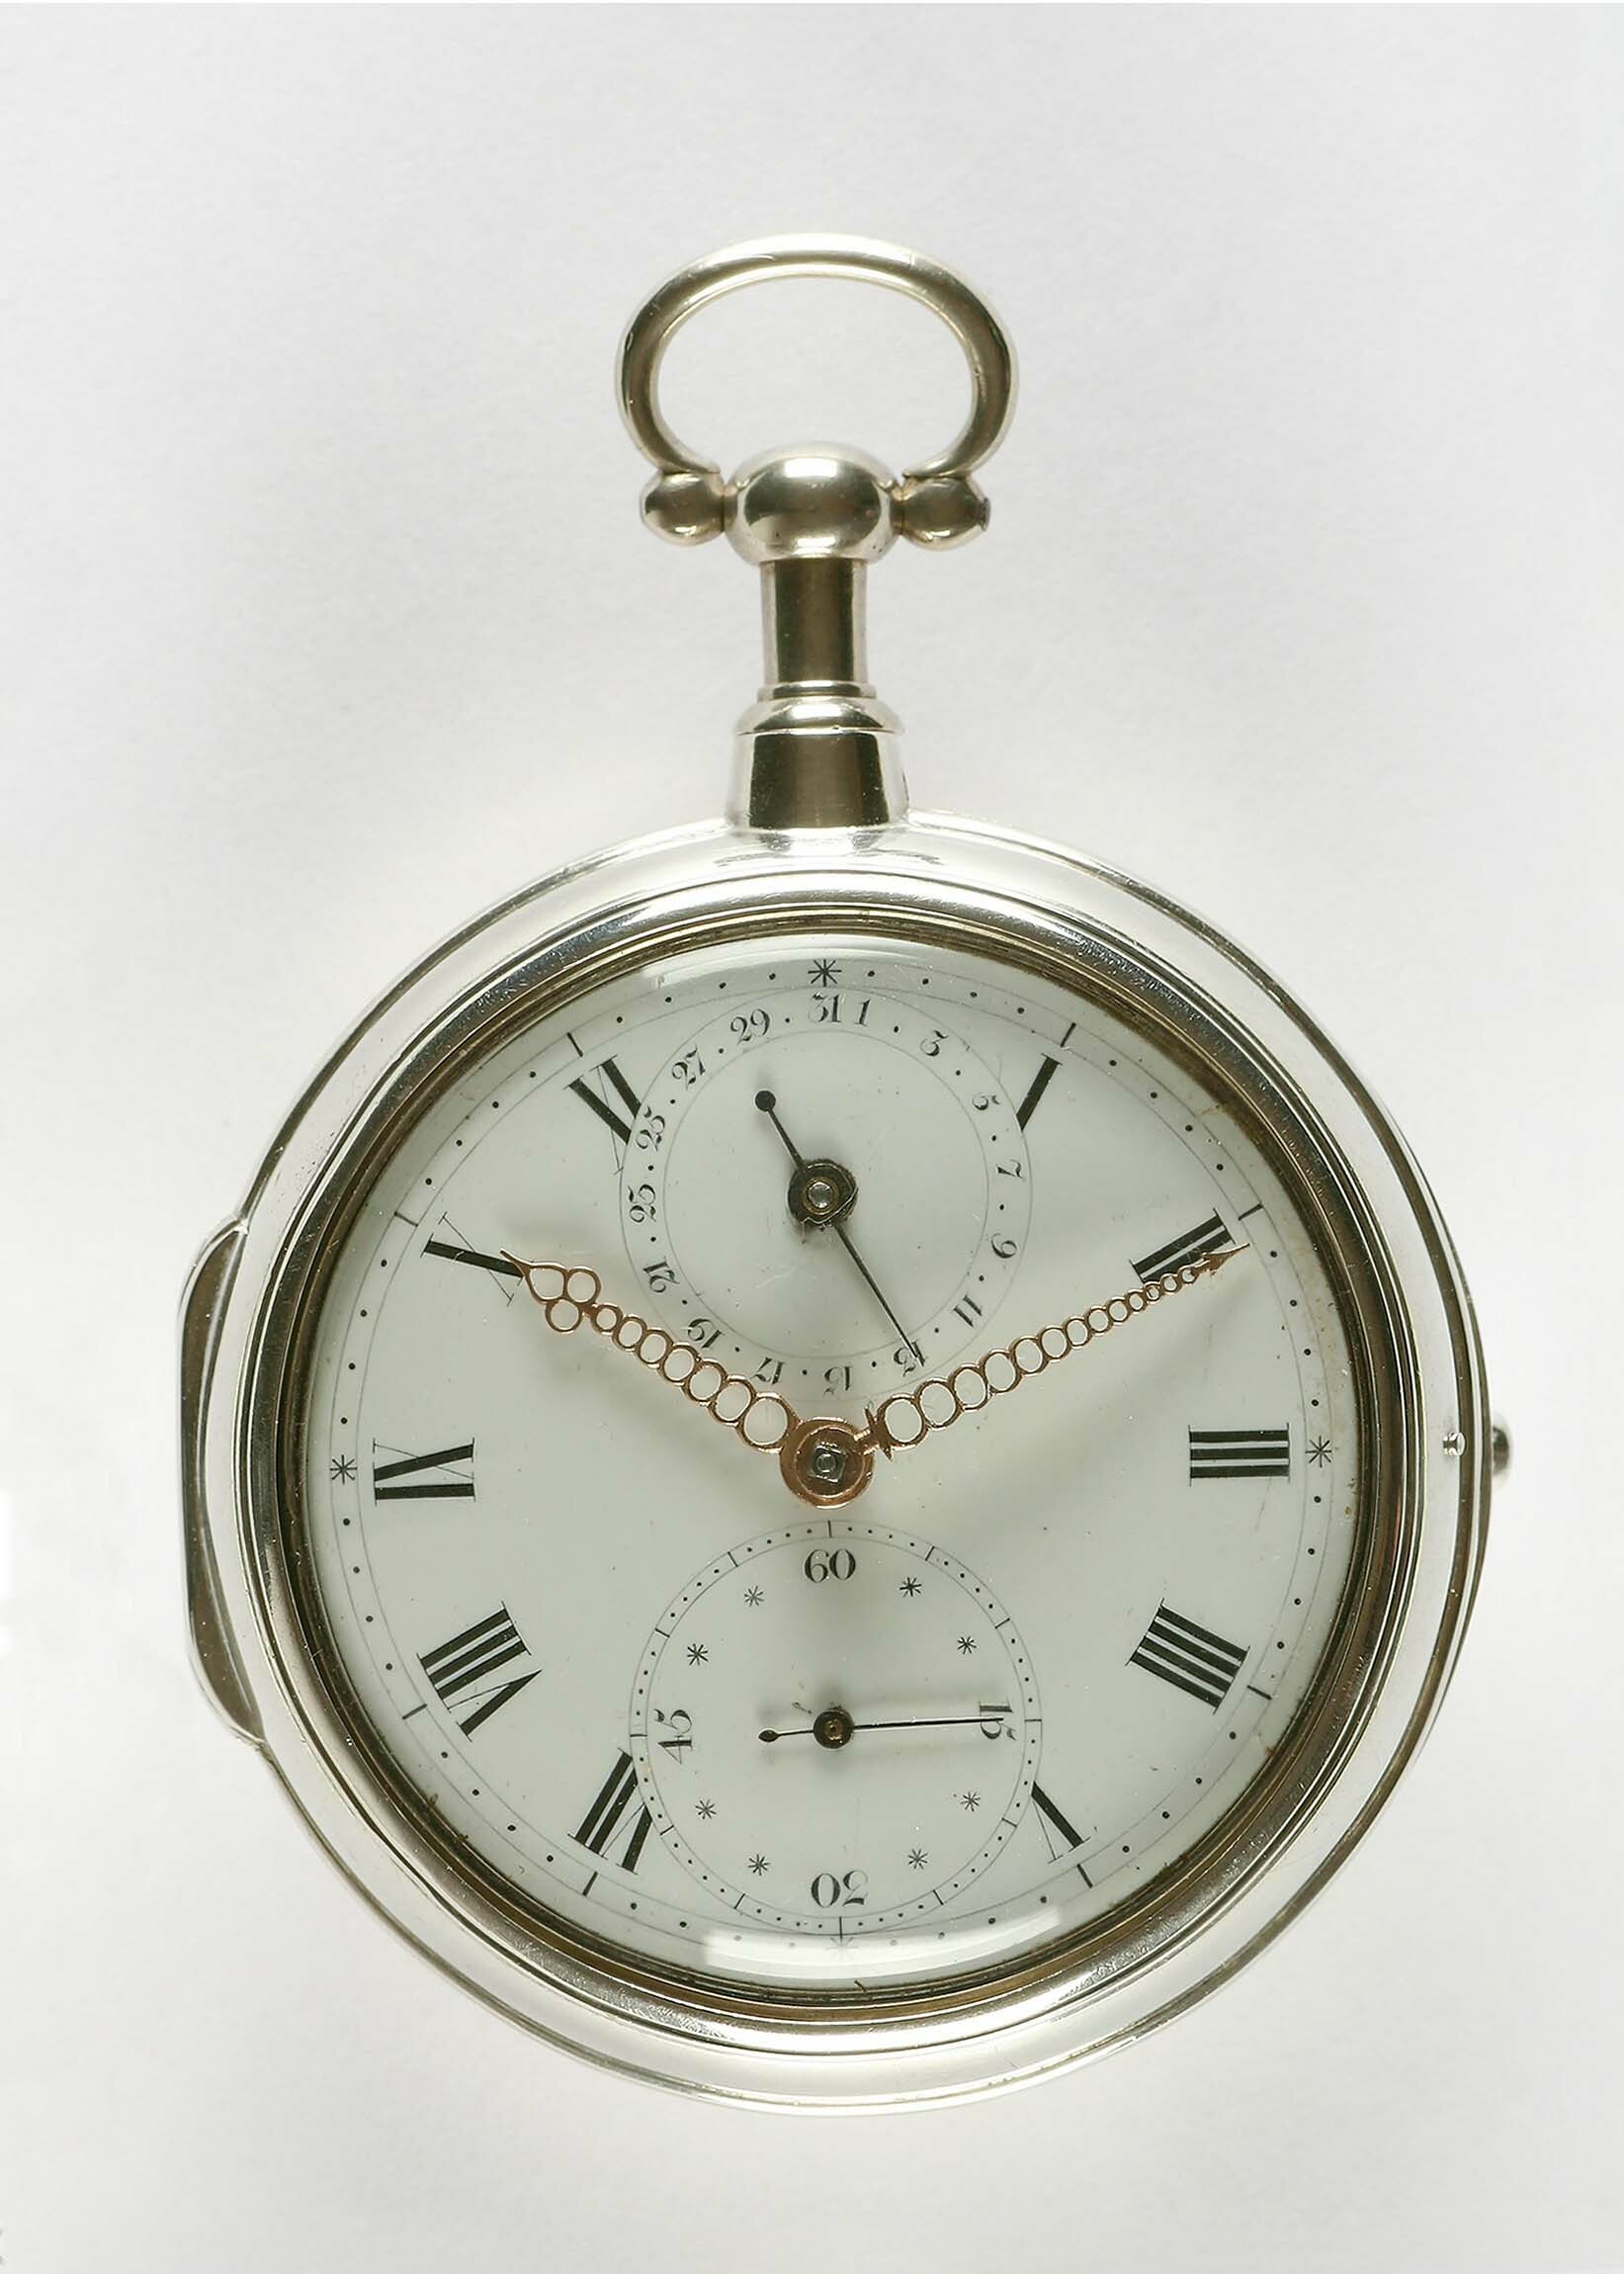 Taschenuhr, Cohen, Hastings, Samuel Brookes, London, 1812 (Deutsches Uhrenmuseum CC BY-SA)